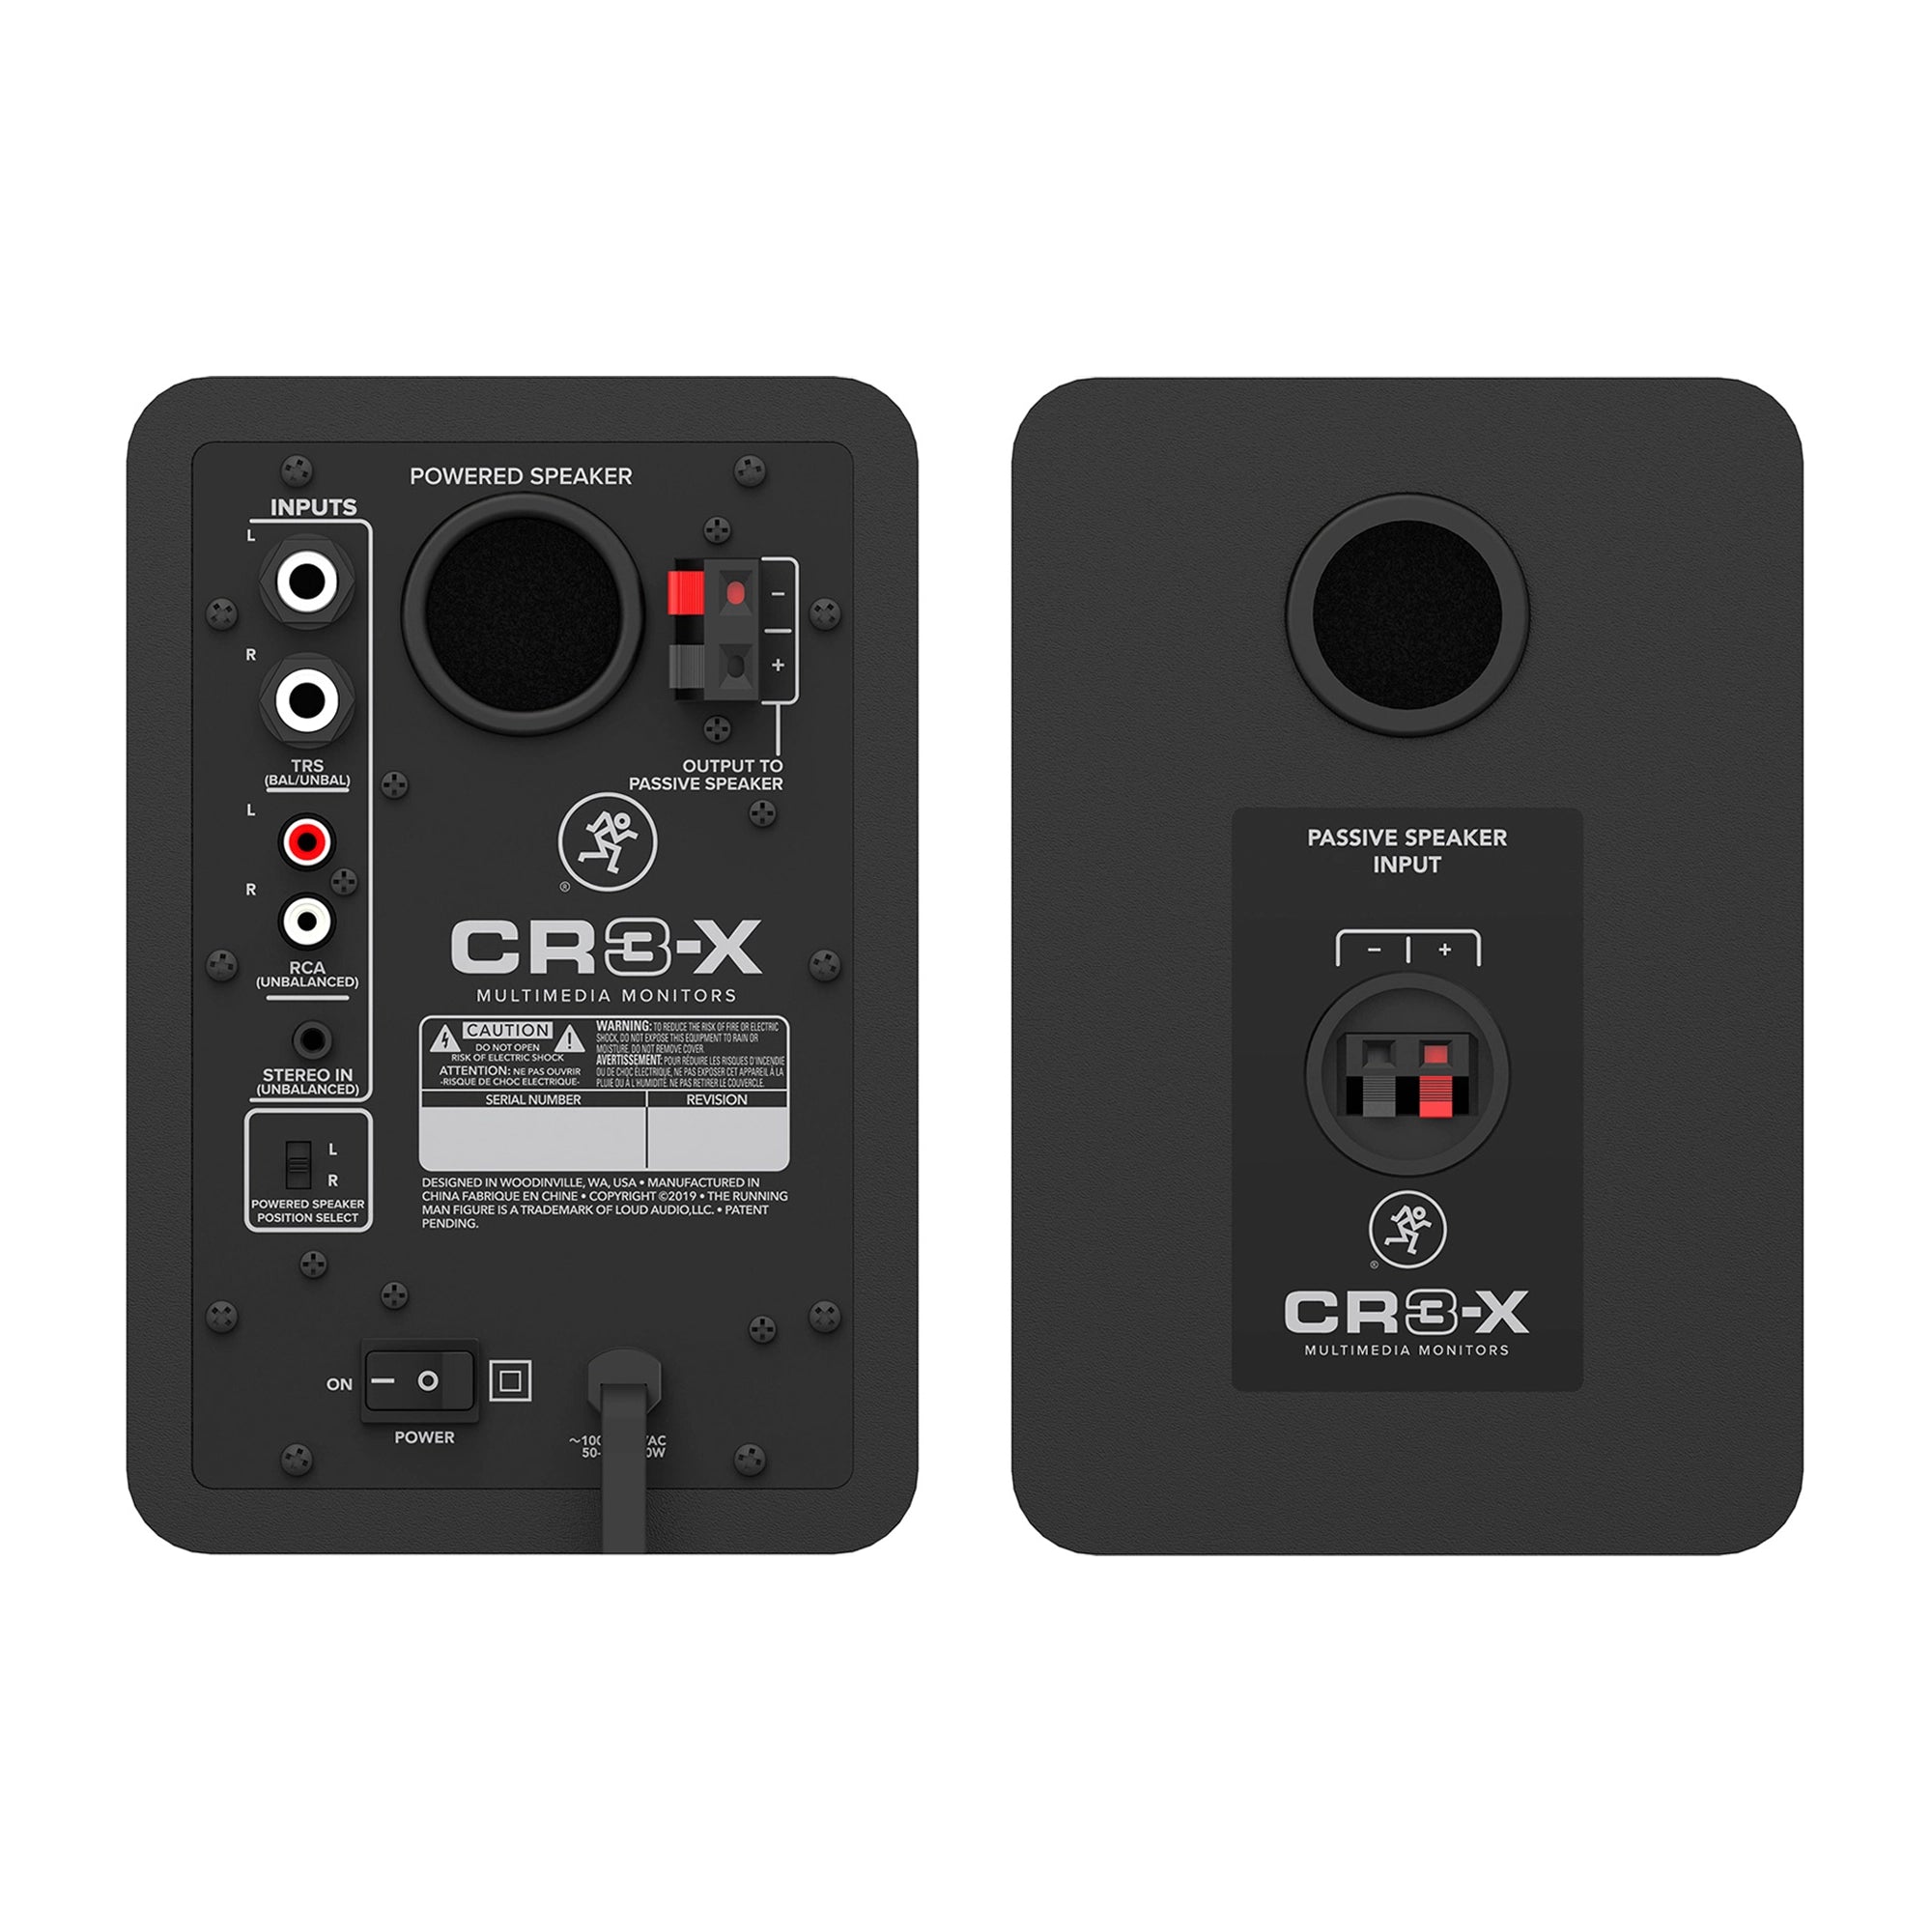 Mackie CR3-X Creative Reference Series 3" Multimedia Monitors (Pair)